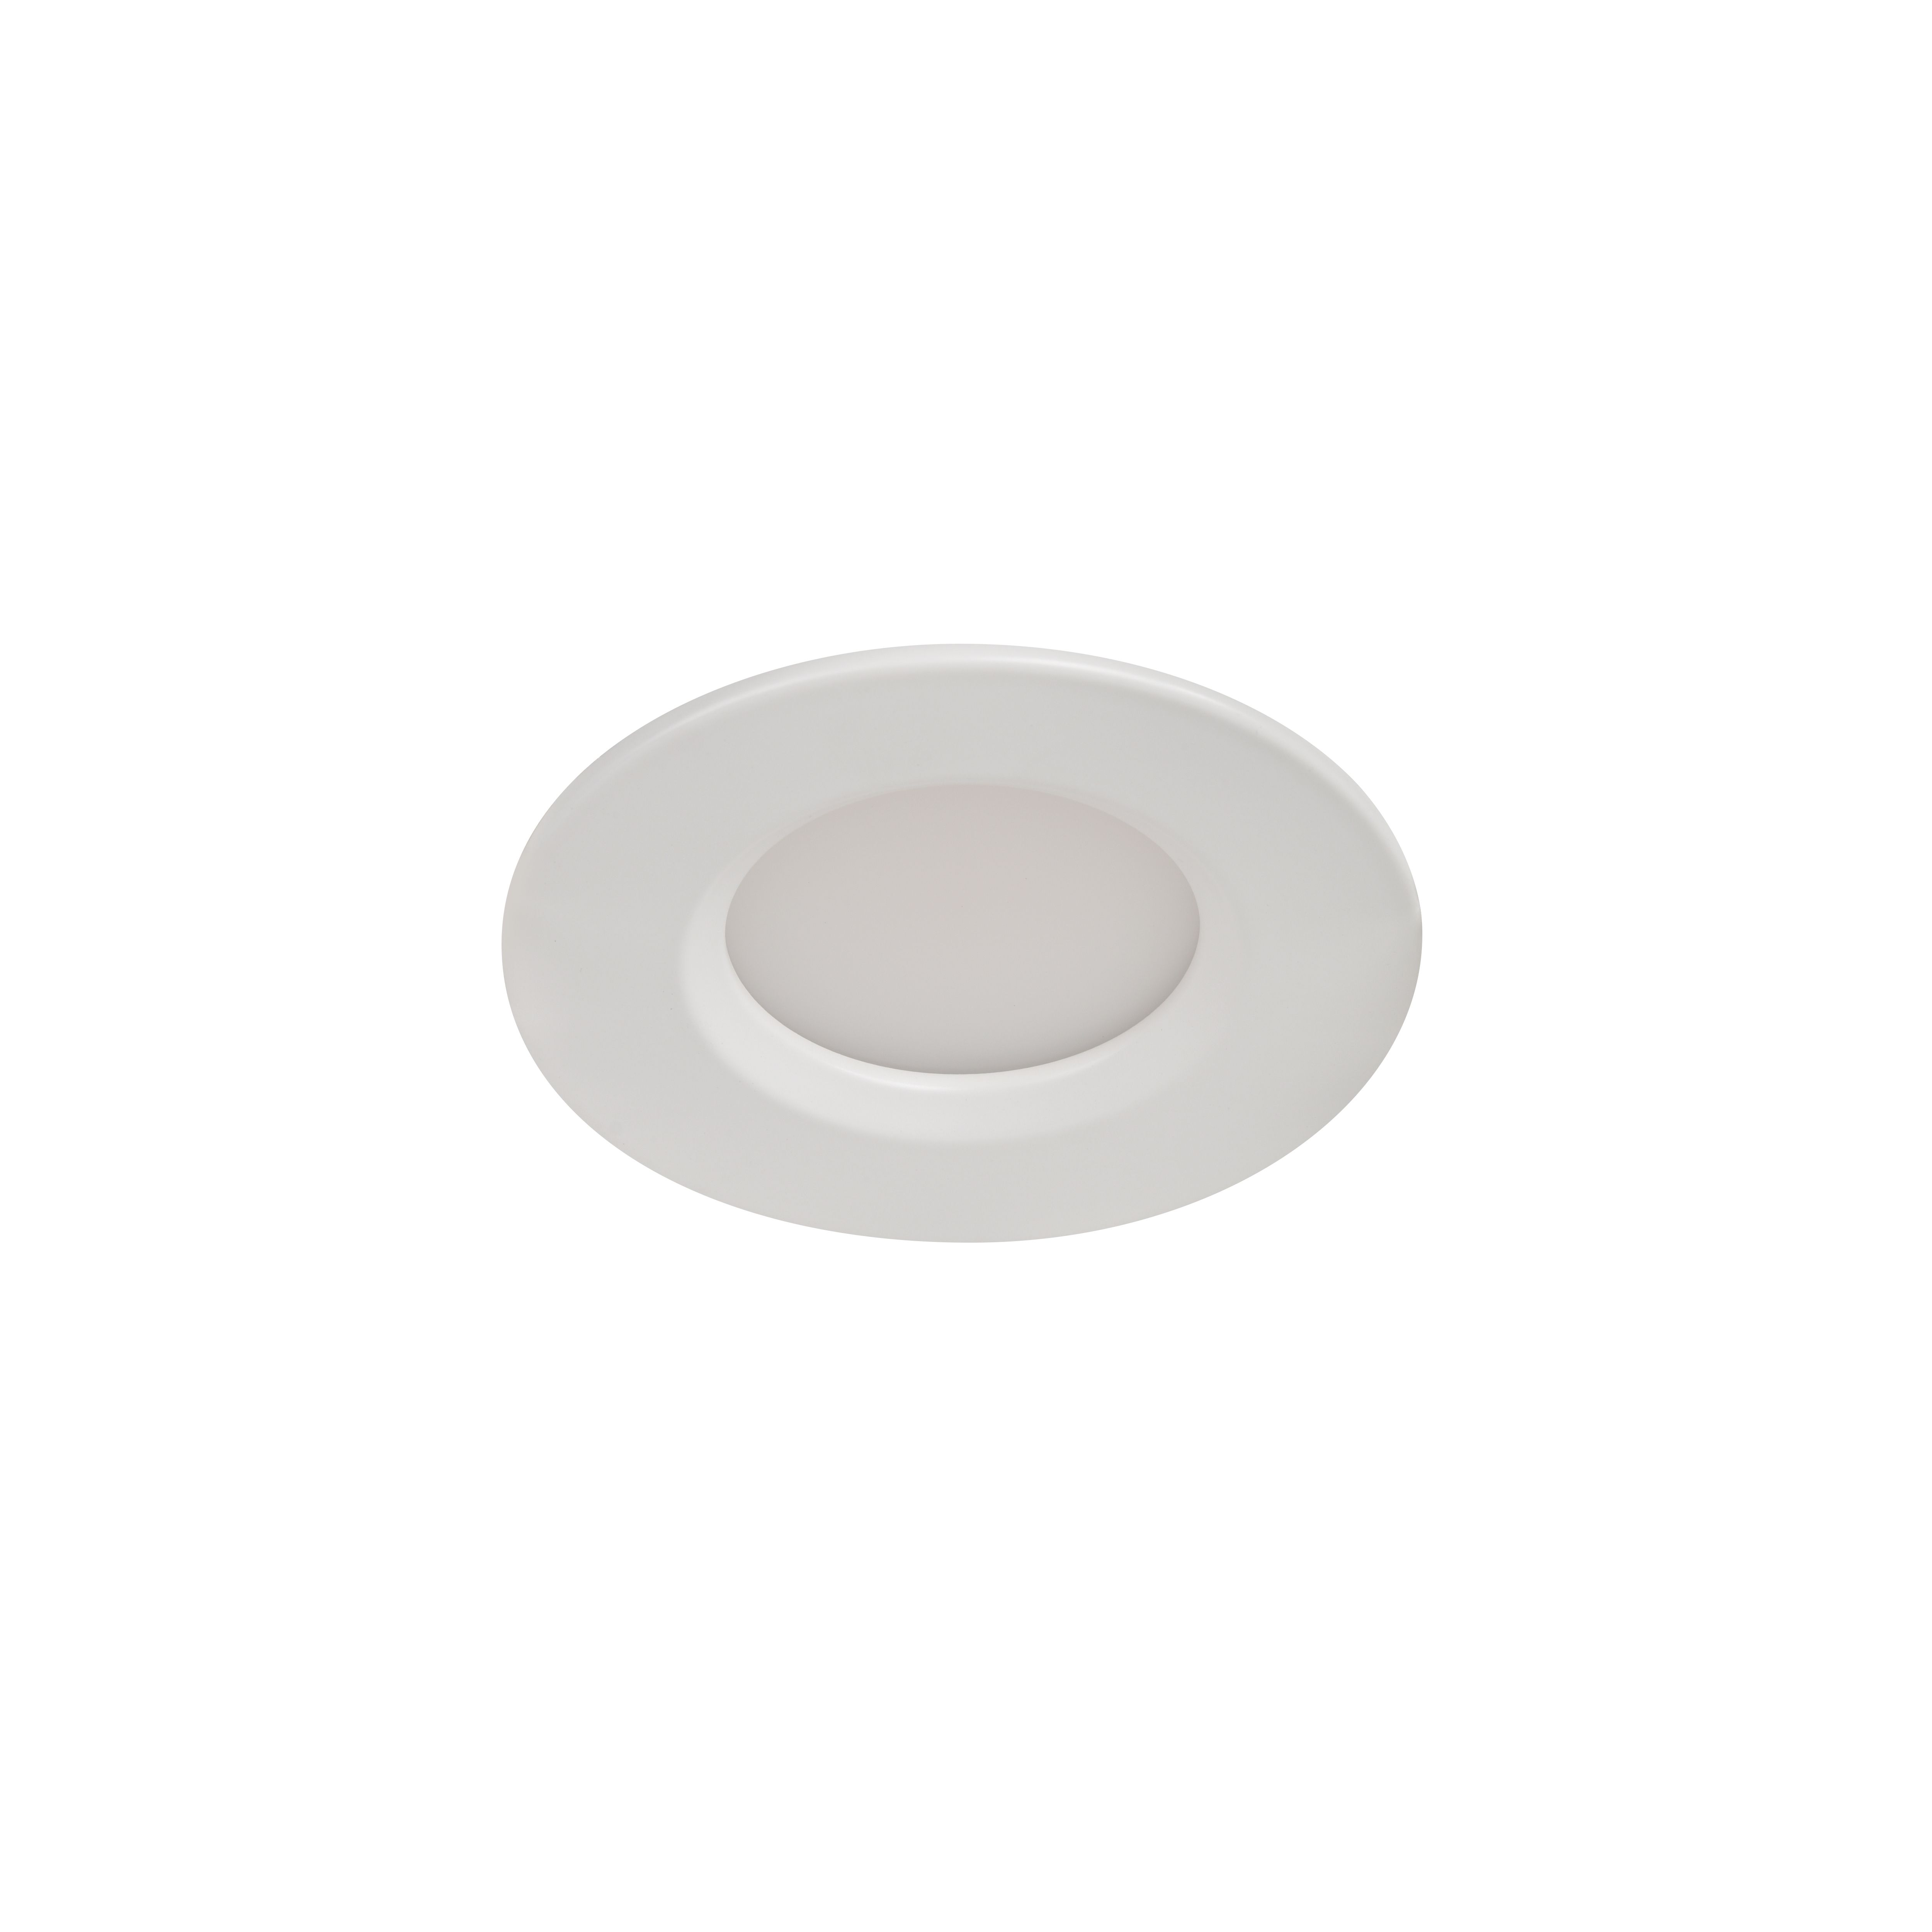 GoodHome Etana White Non-adjustable LED Neutral white Downlight 4.7W IP65, Pack of 3